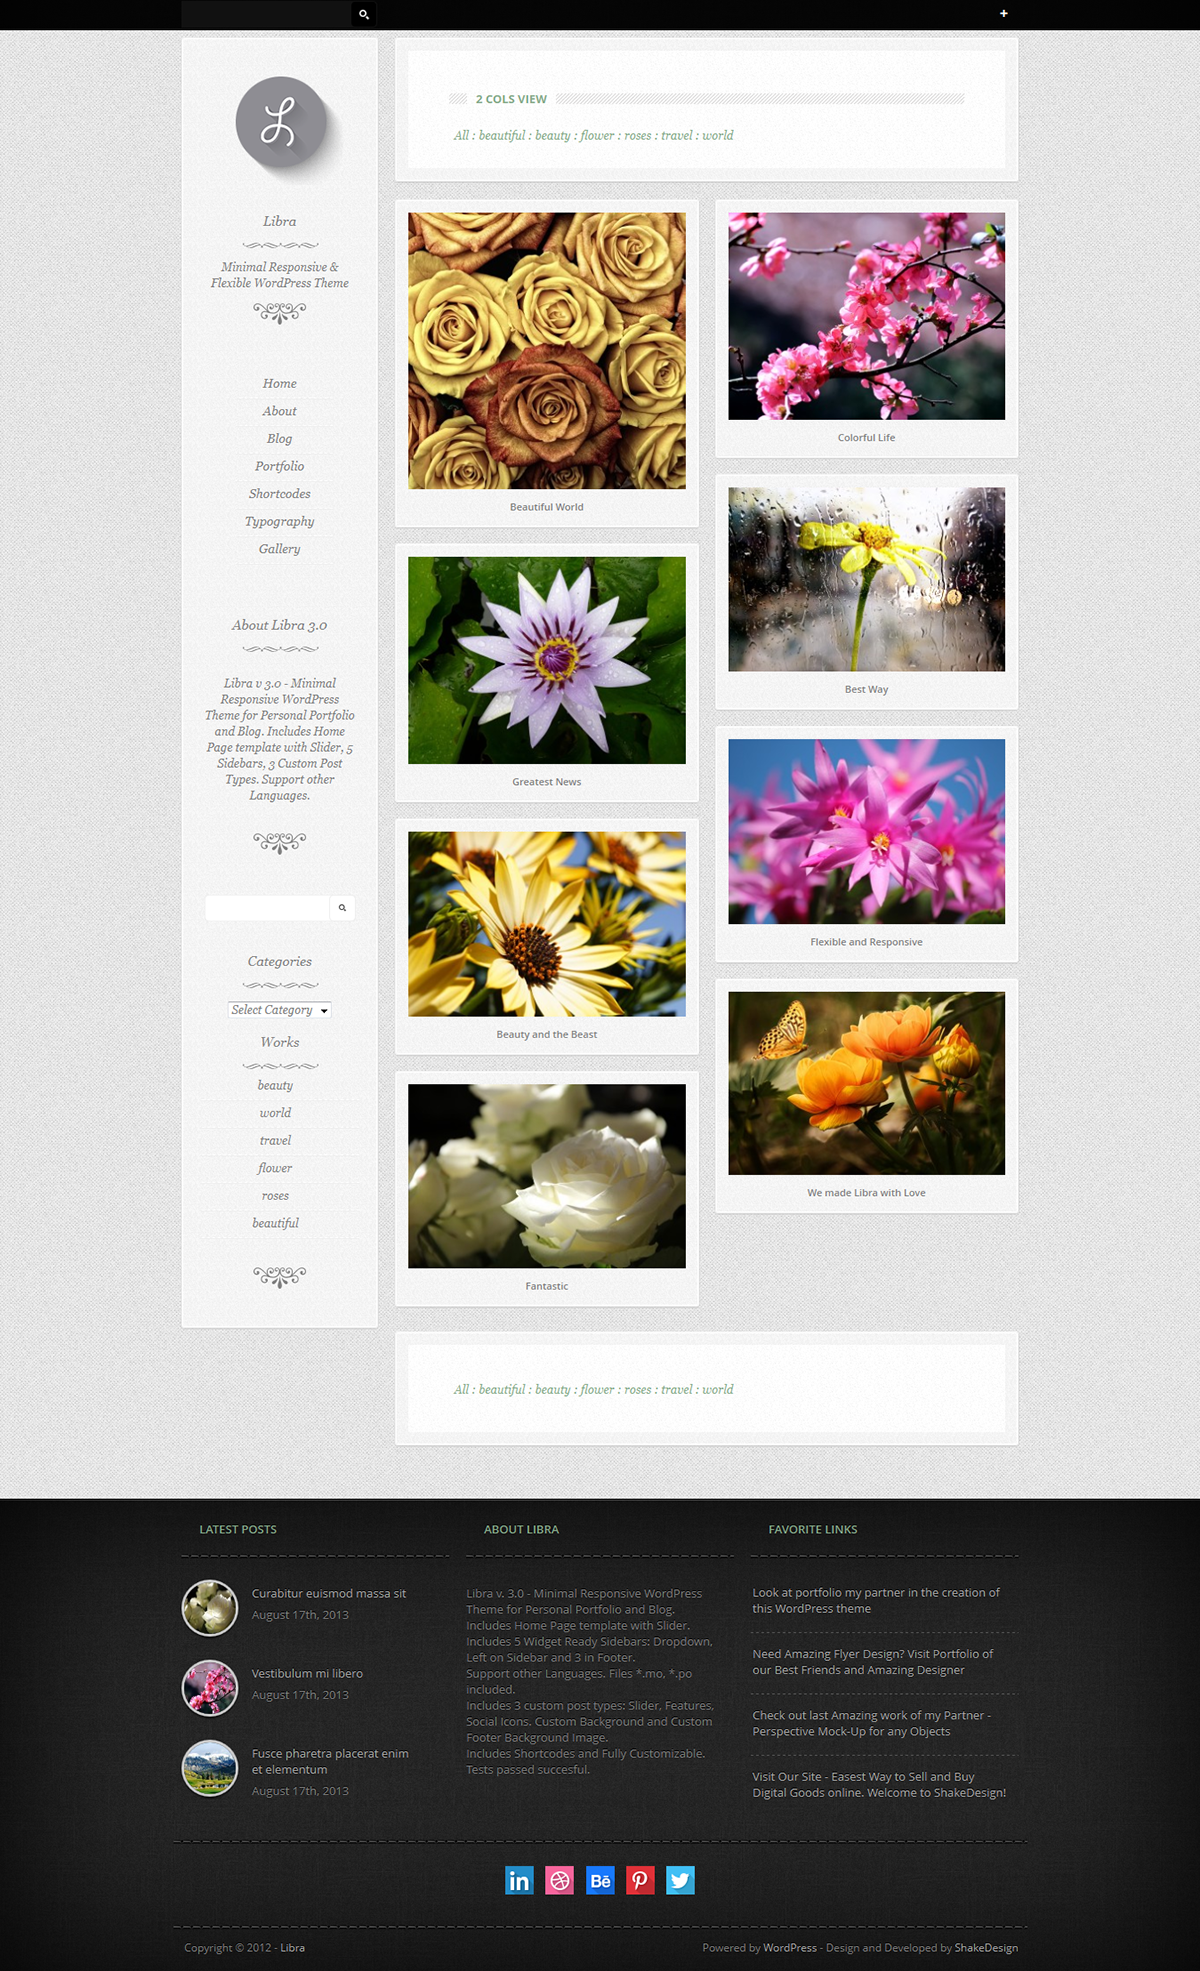 wordpress theme Responsive minimal portfolio Blog